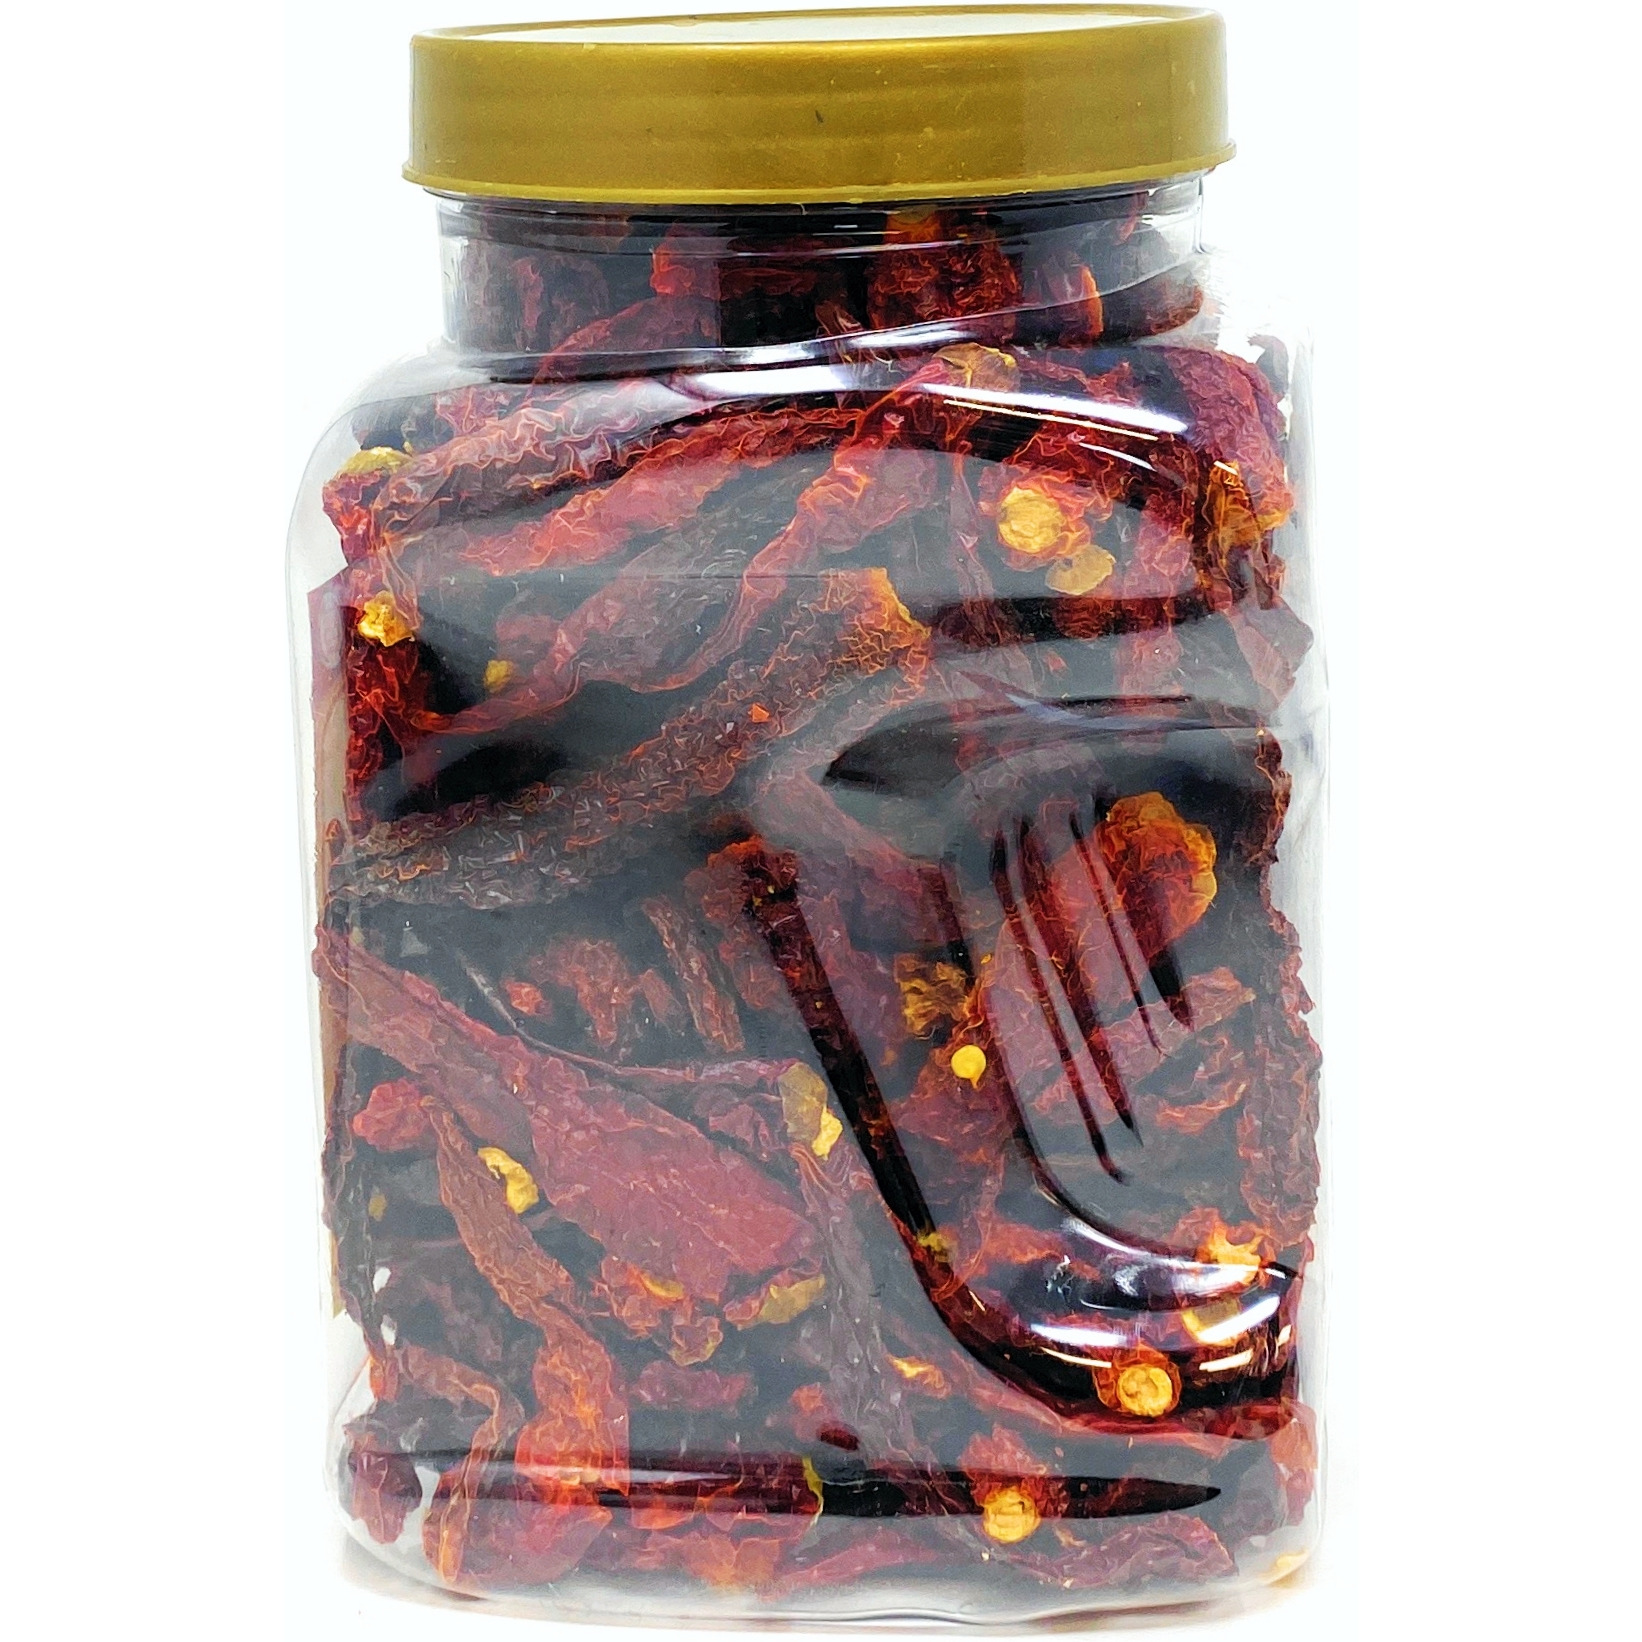 Rani Kashmiri Chilli (Deggi Mirch, Low Heat) Whole Indian Spice 9oz (255g) PET Jar ~ All Natural, Salt-Free | Vegan | No Colors | Gluten Friendly | NON-GMO | Indian Origin